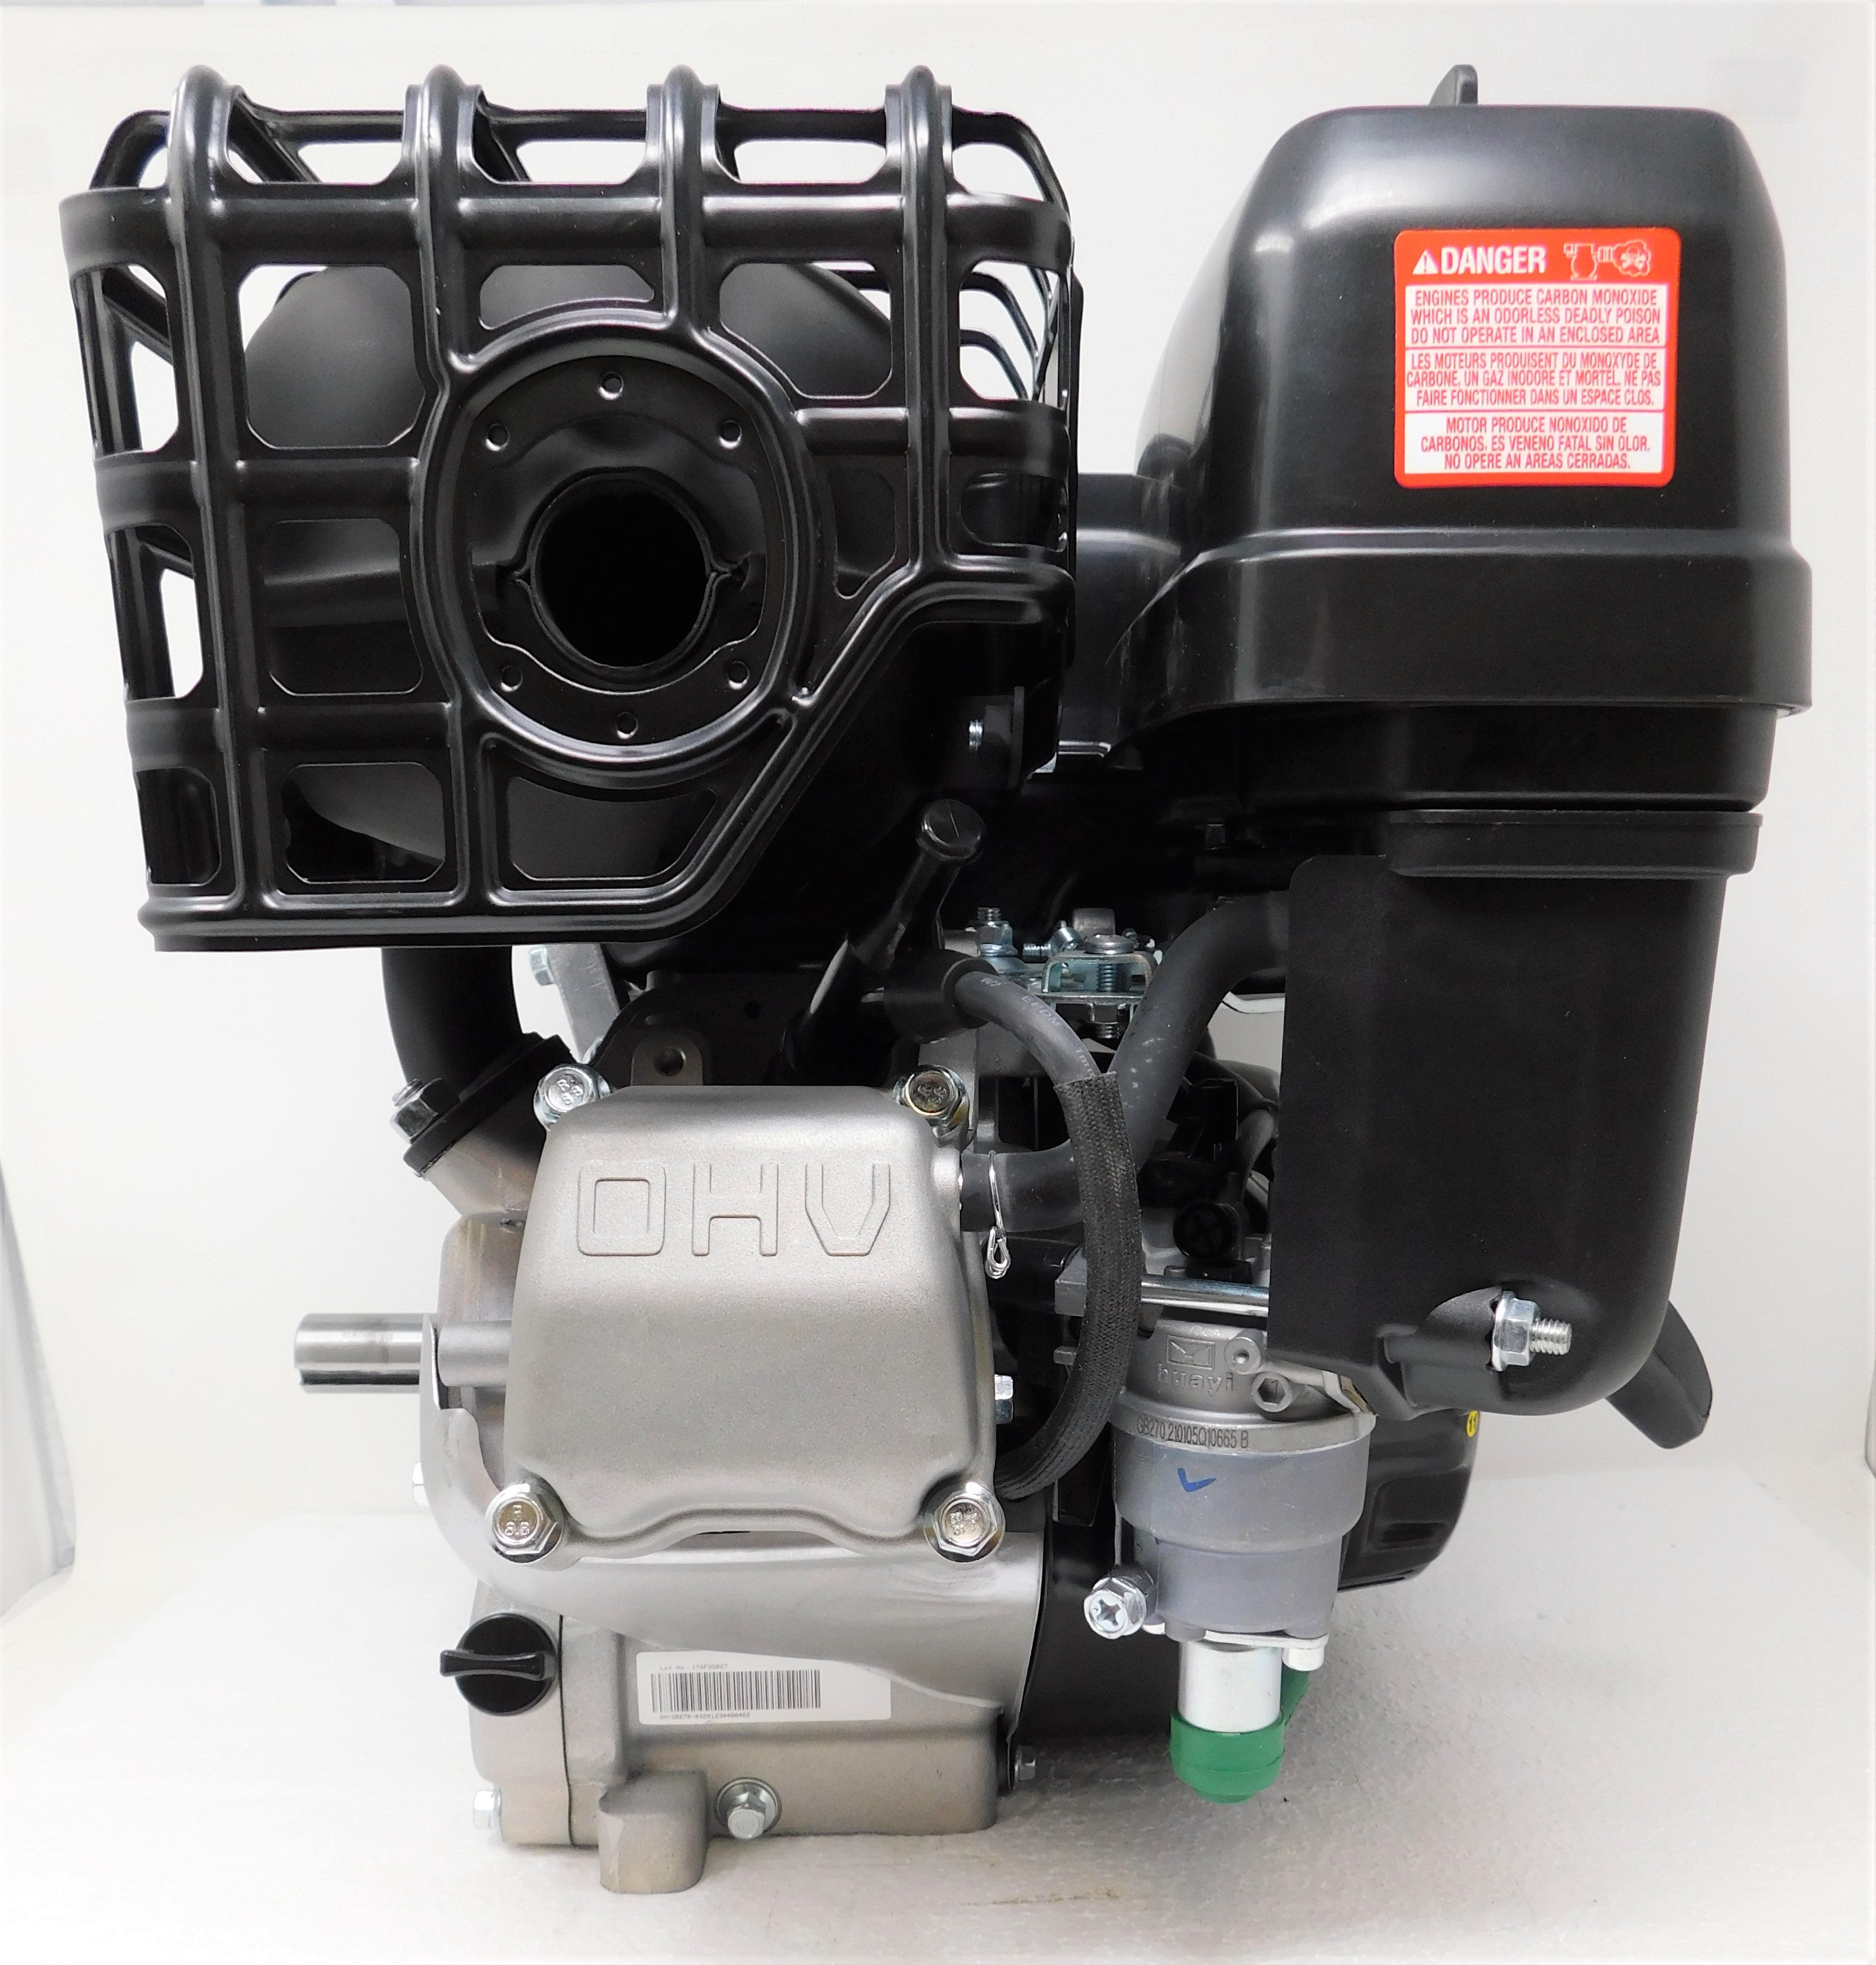 Simpson CRX270 272cc Horizontal Shaft Engine 1